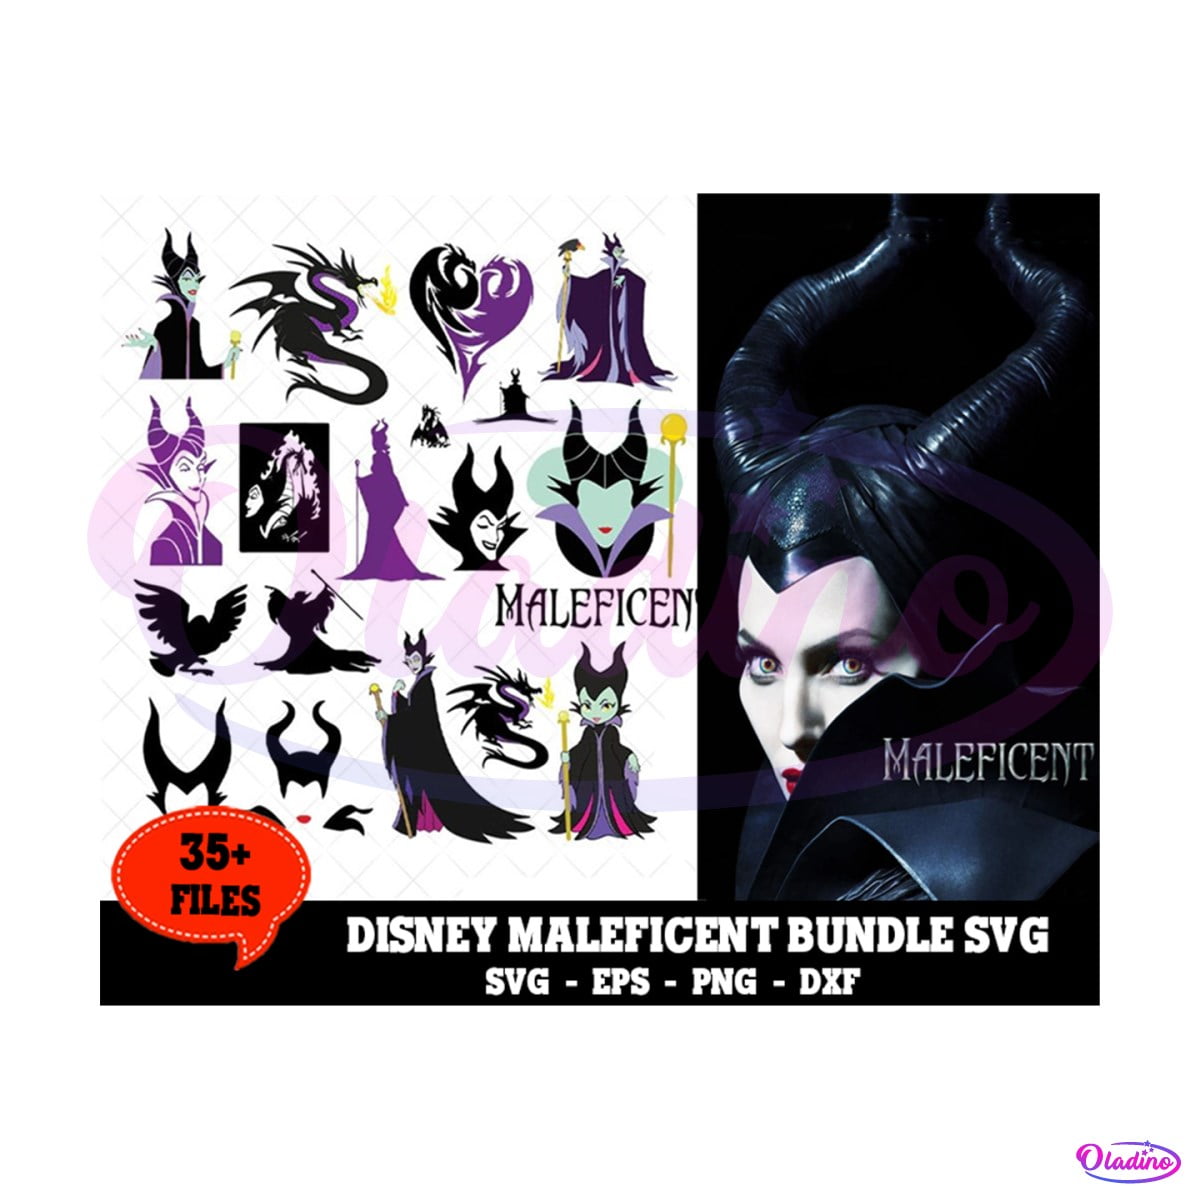 35+ Files Maleficent Bundle SVG